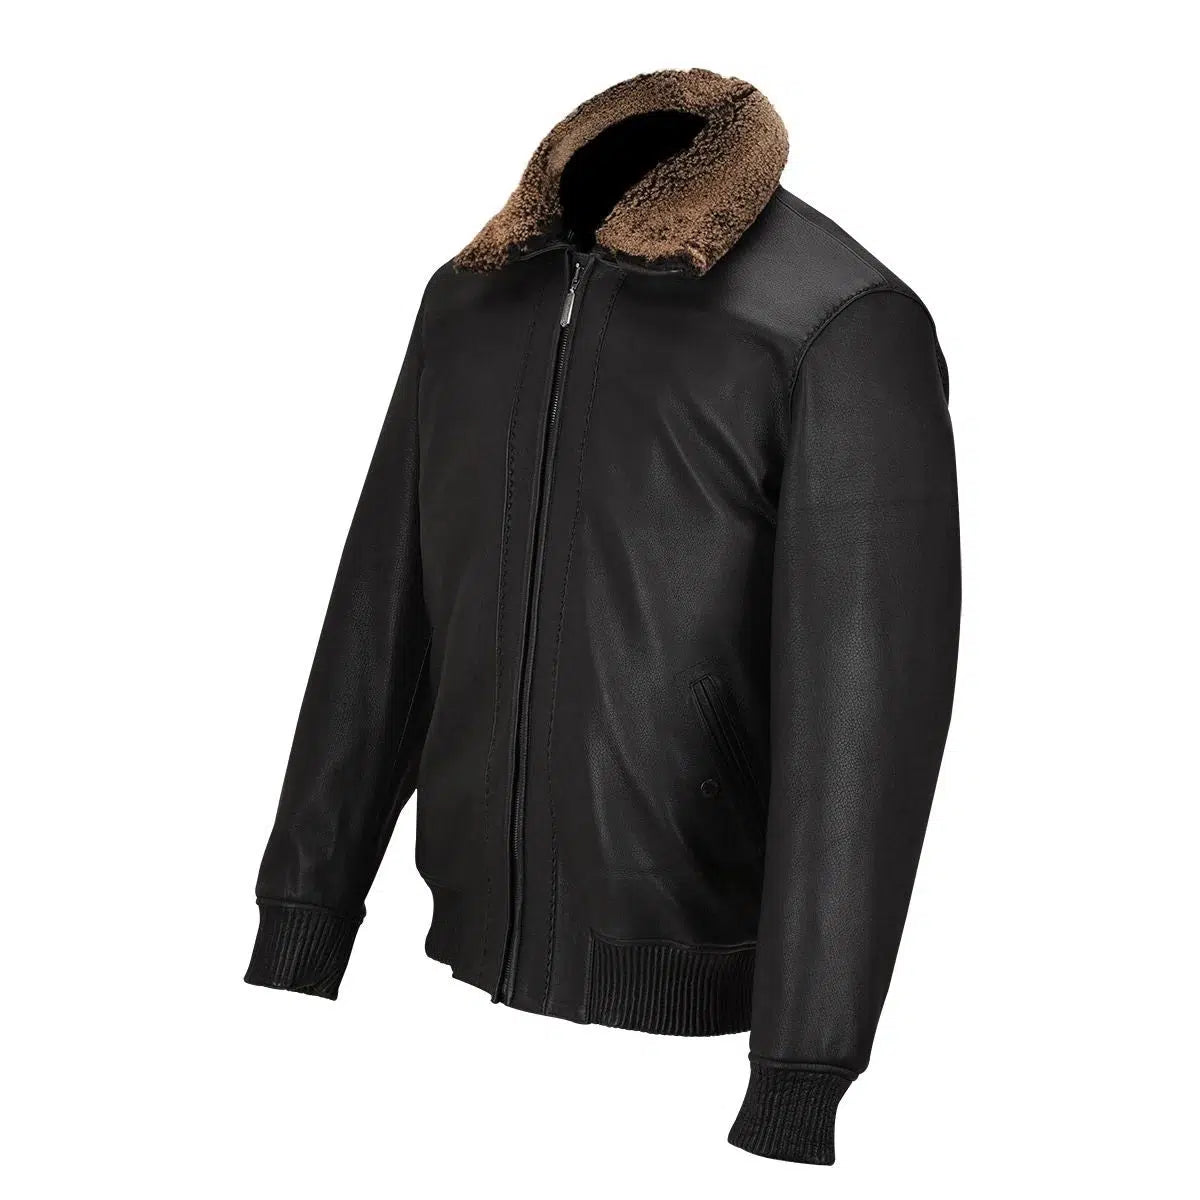 H321COB - Cuadra black casual fashion goat leather motorcycle aviator jacket for men-Kuet.us